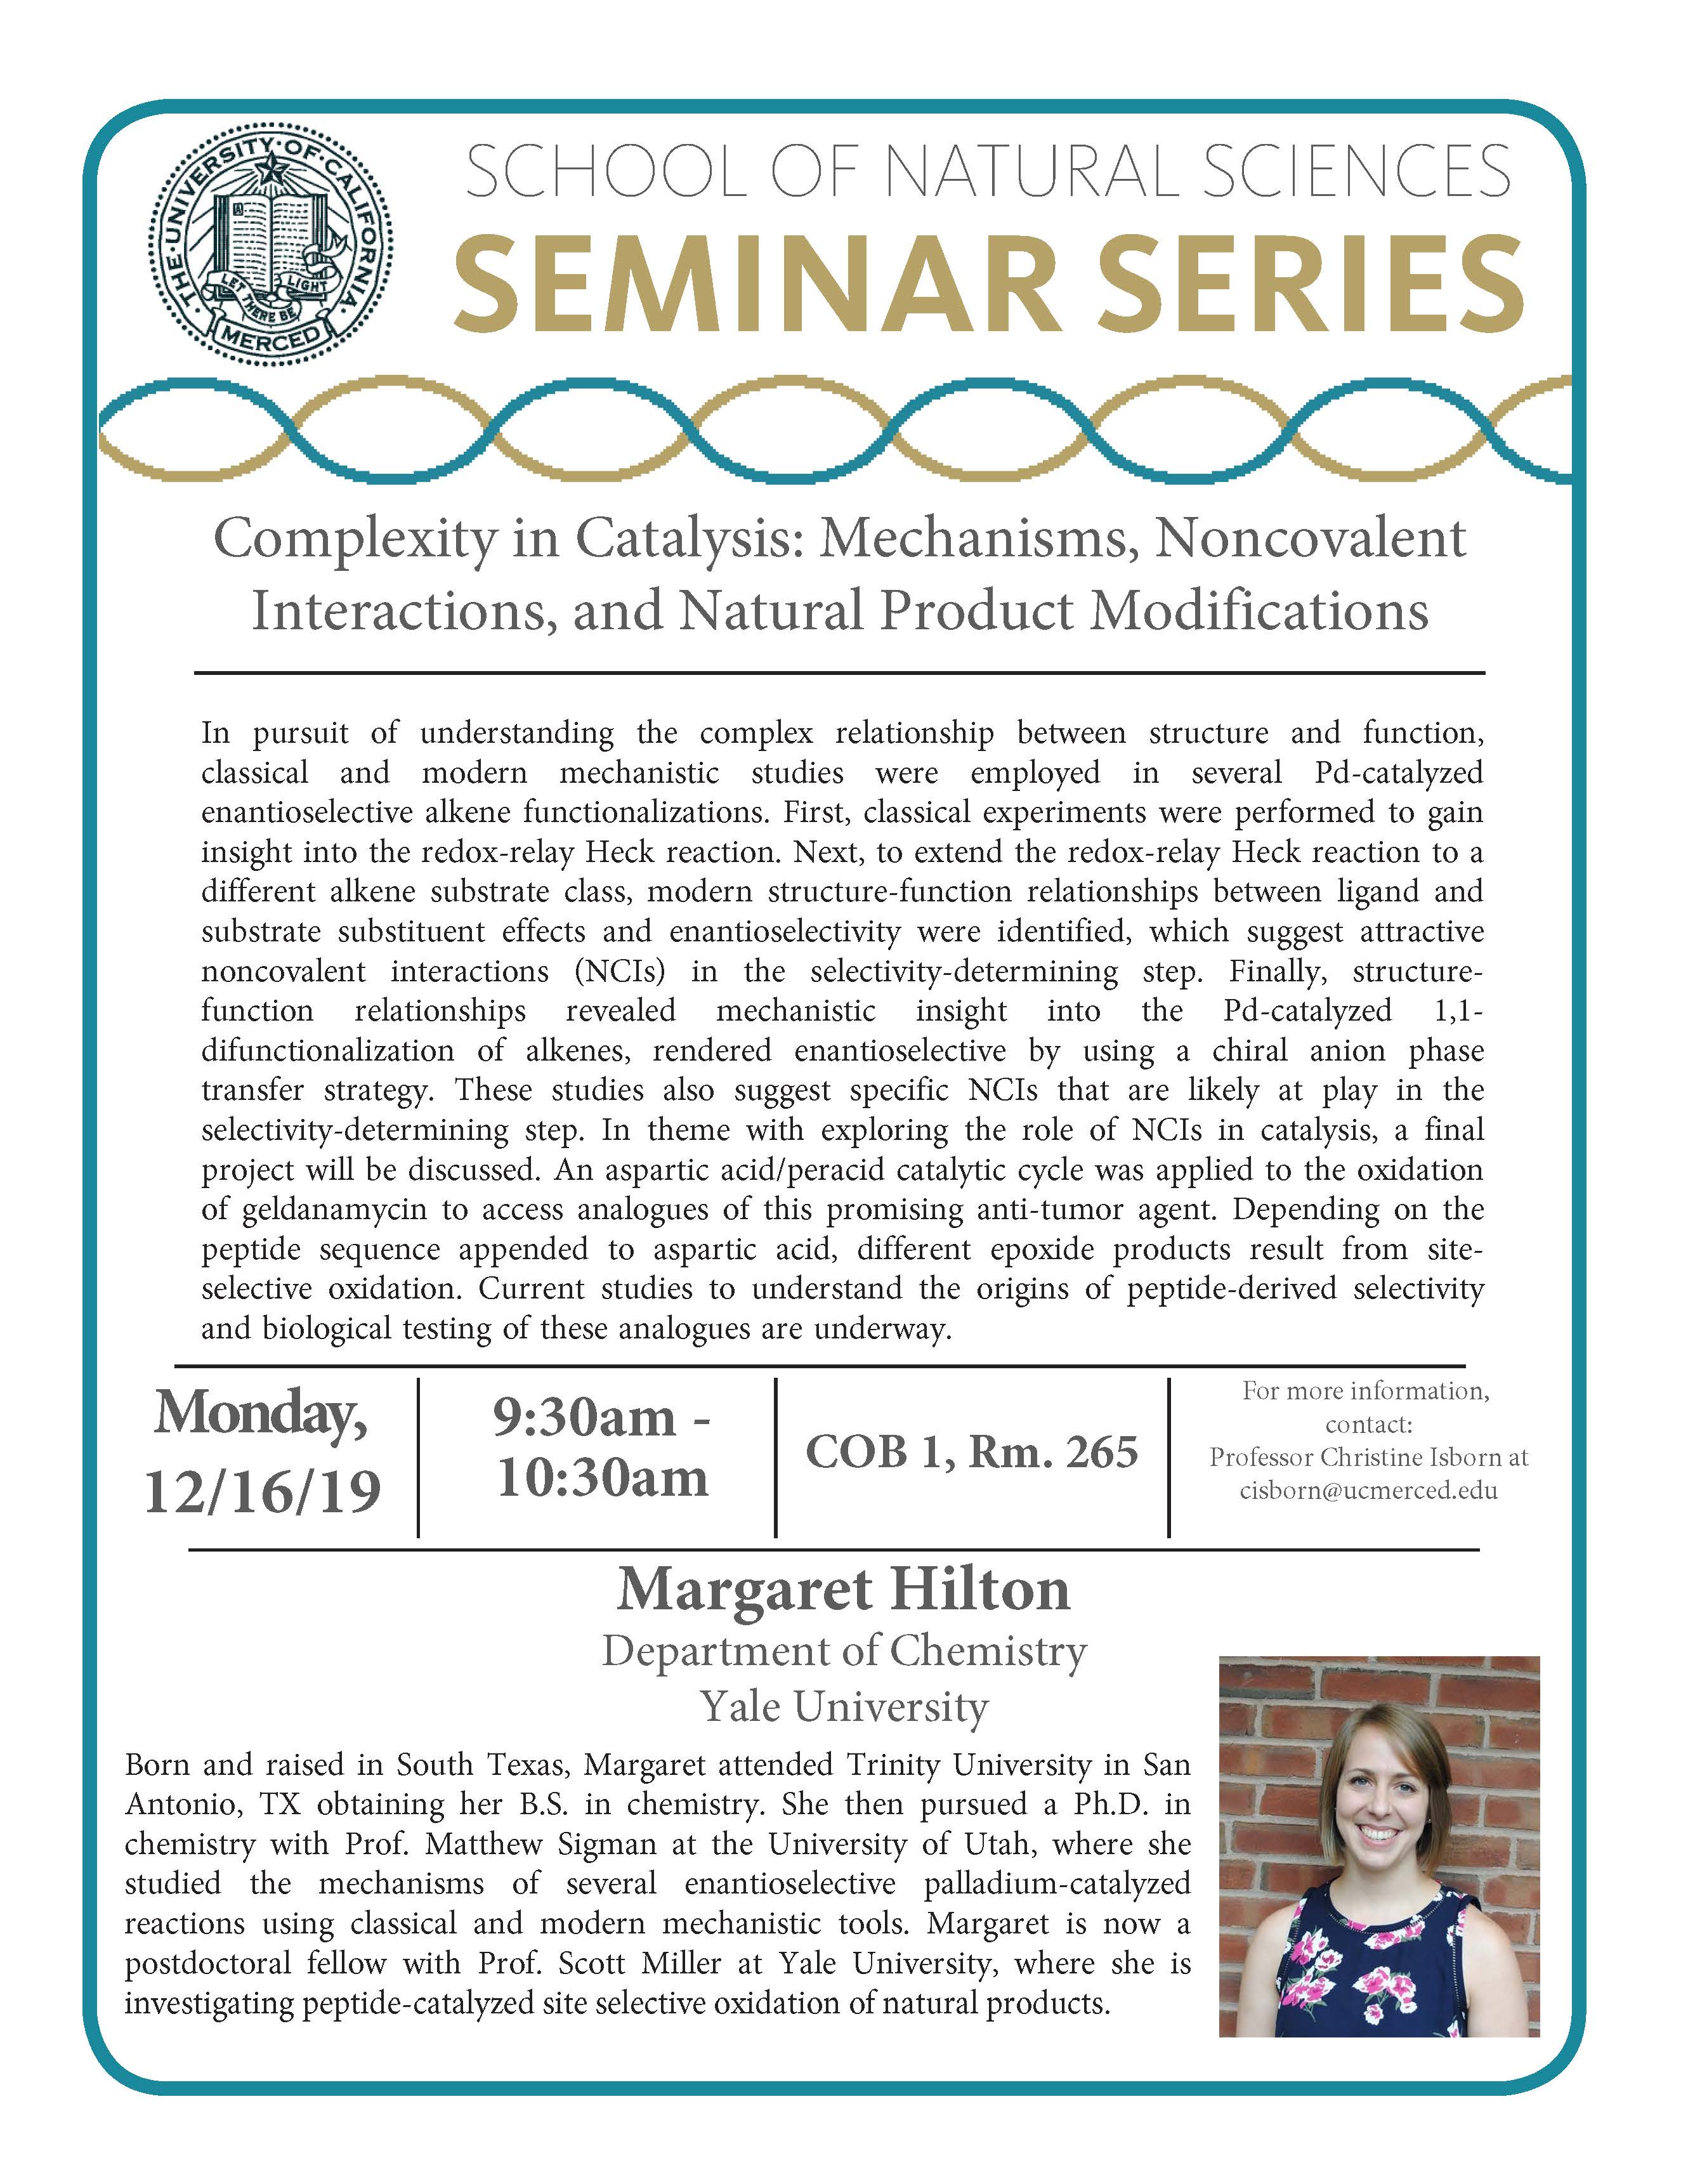 CCB Seminar for Dr. Margaret Hilton